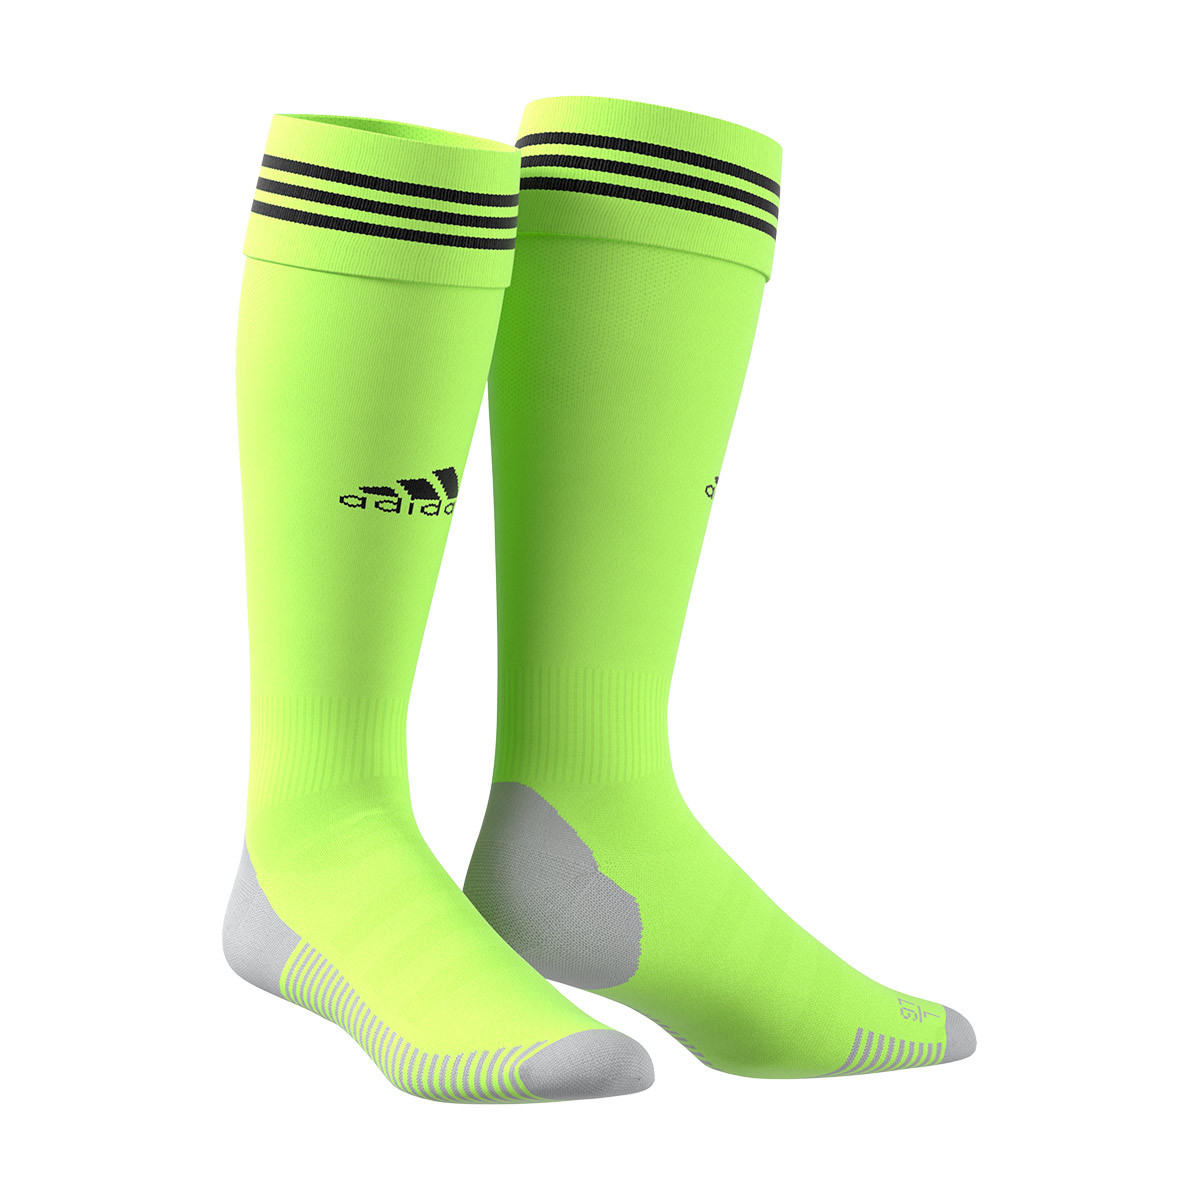 green adidas football socks